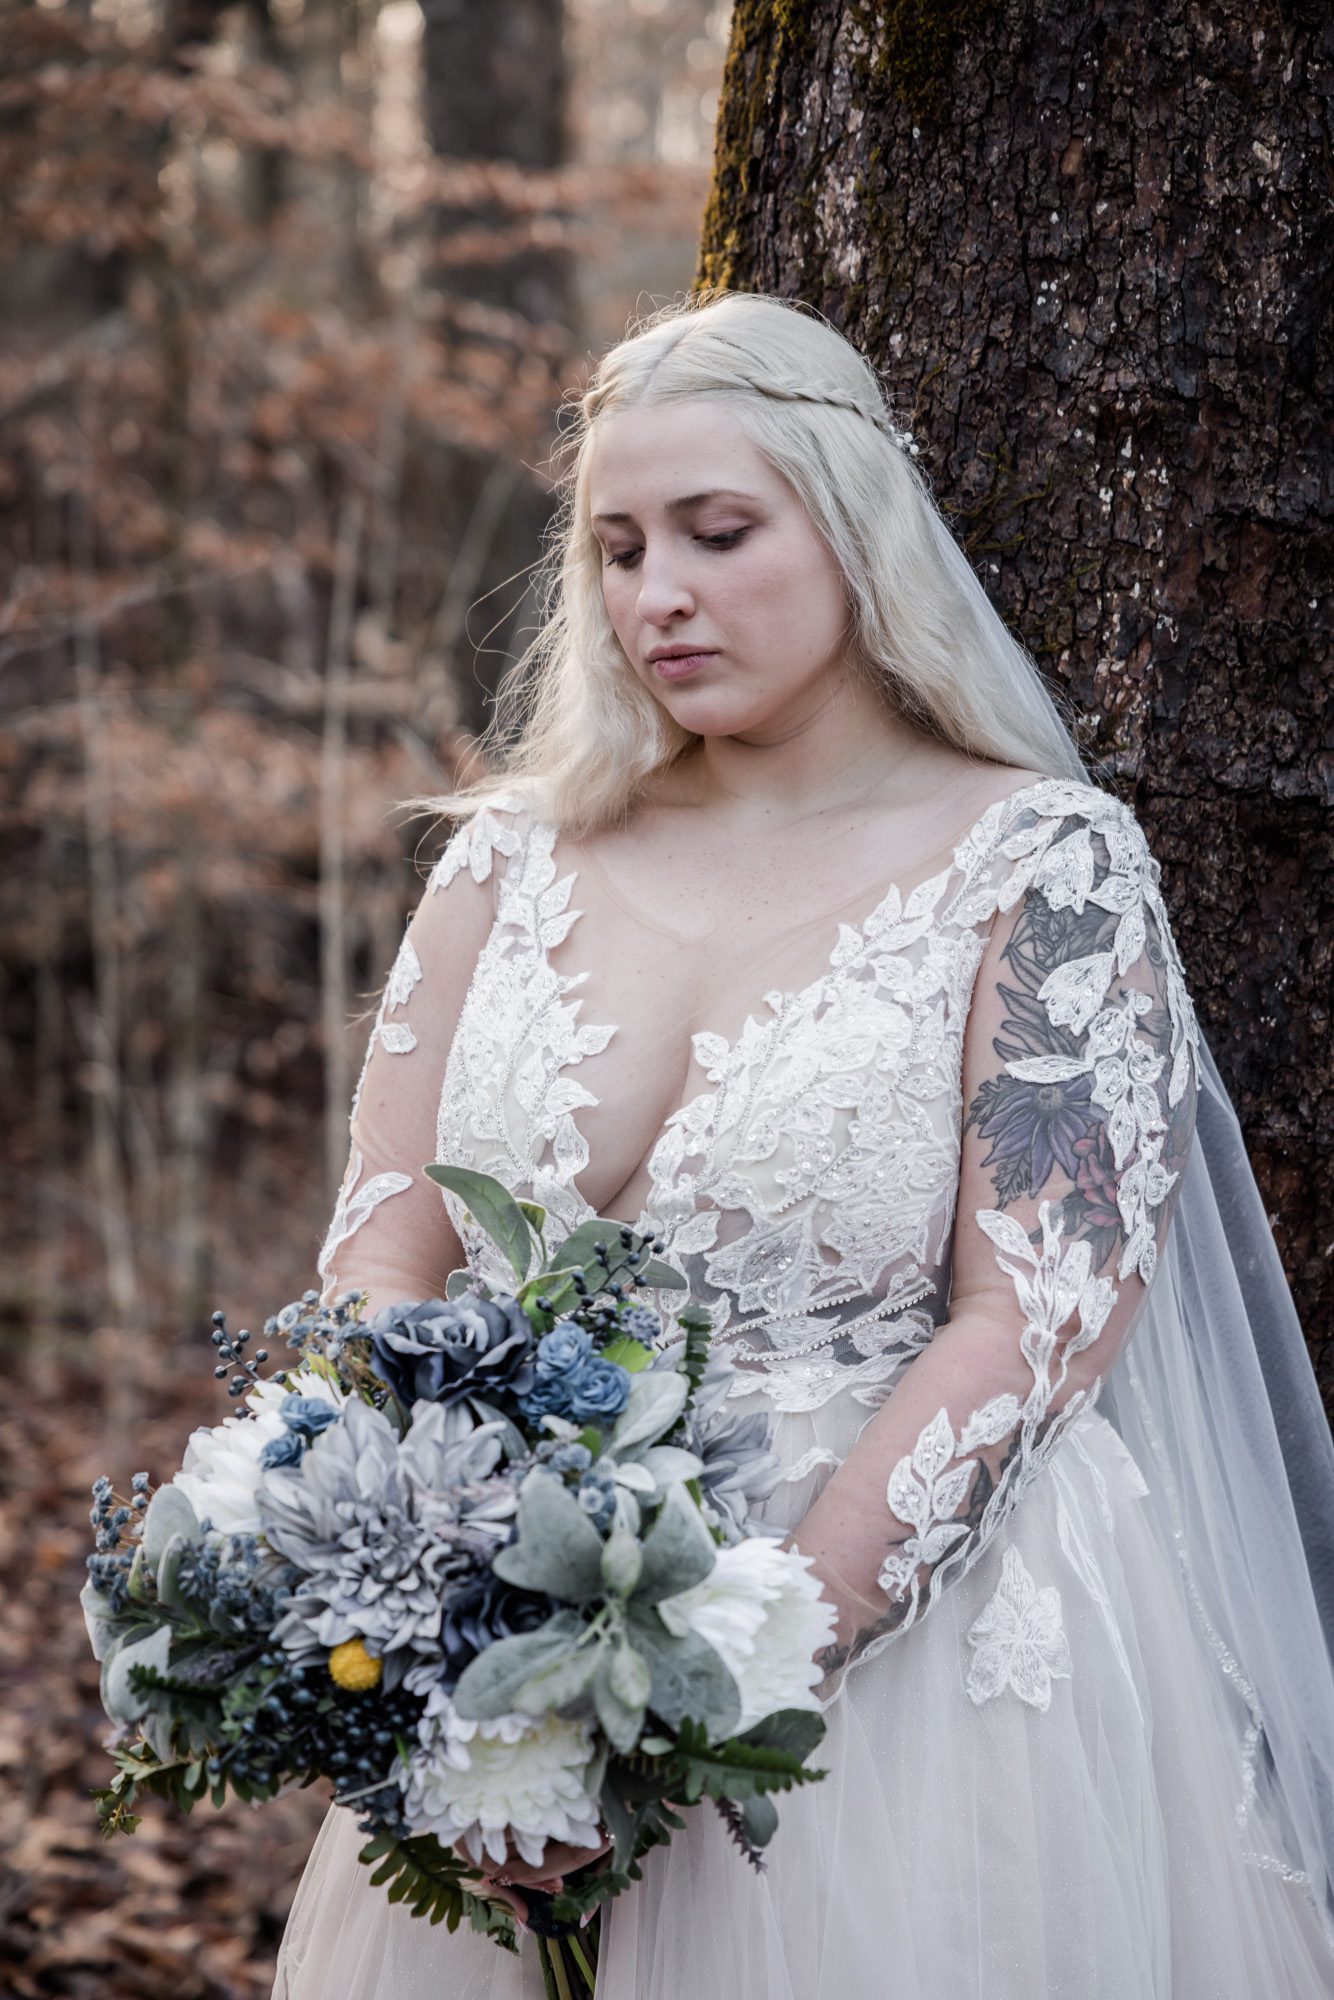 woodsy bride portrait